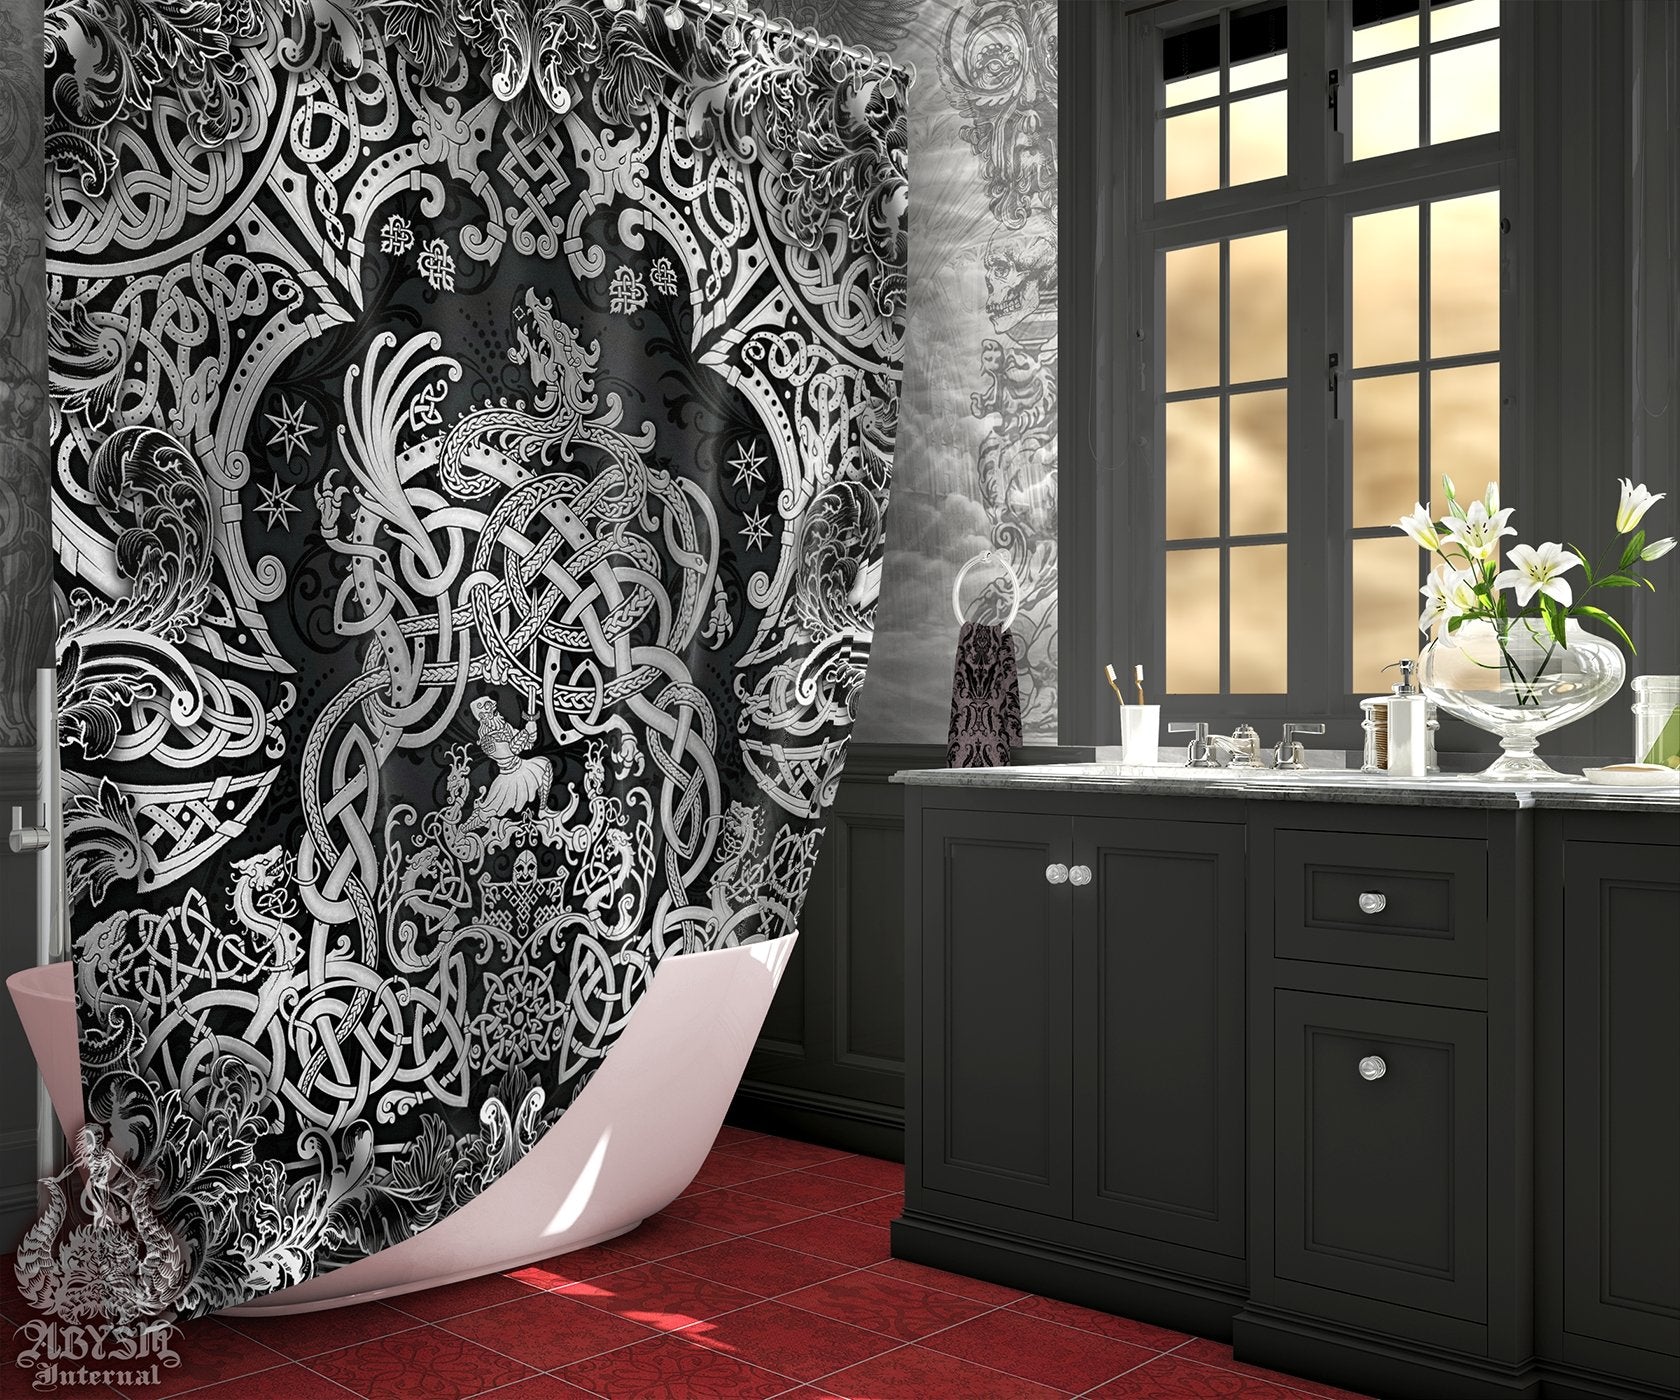 Viking Shower Curtain, Bathroom Decor, Nordic & Norse Art, Dragon Fafnir - Dark - Abysm Internal